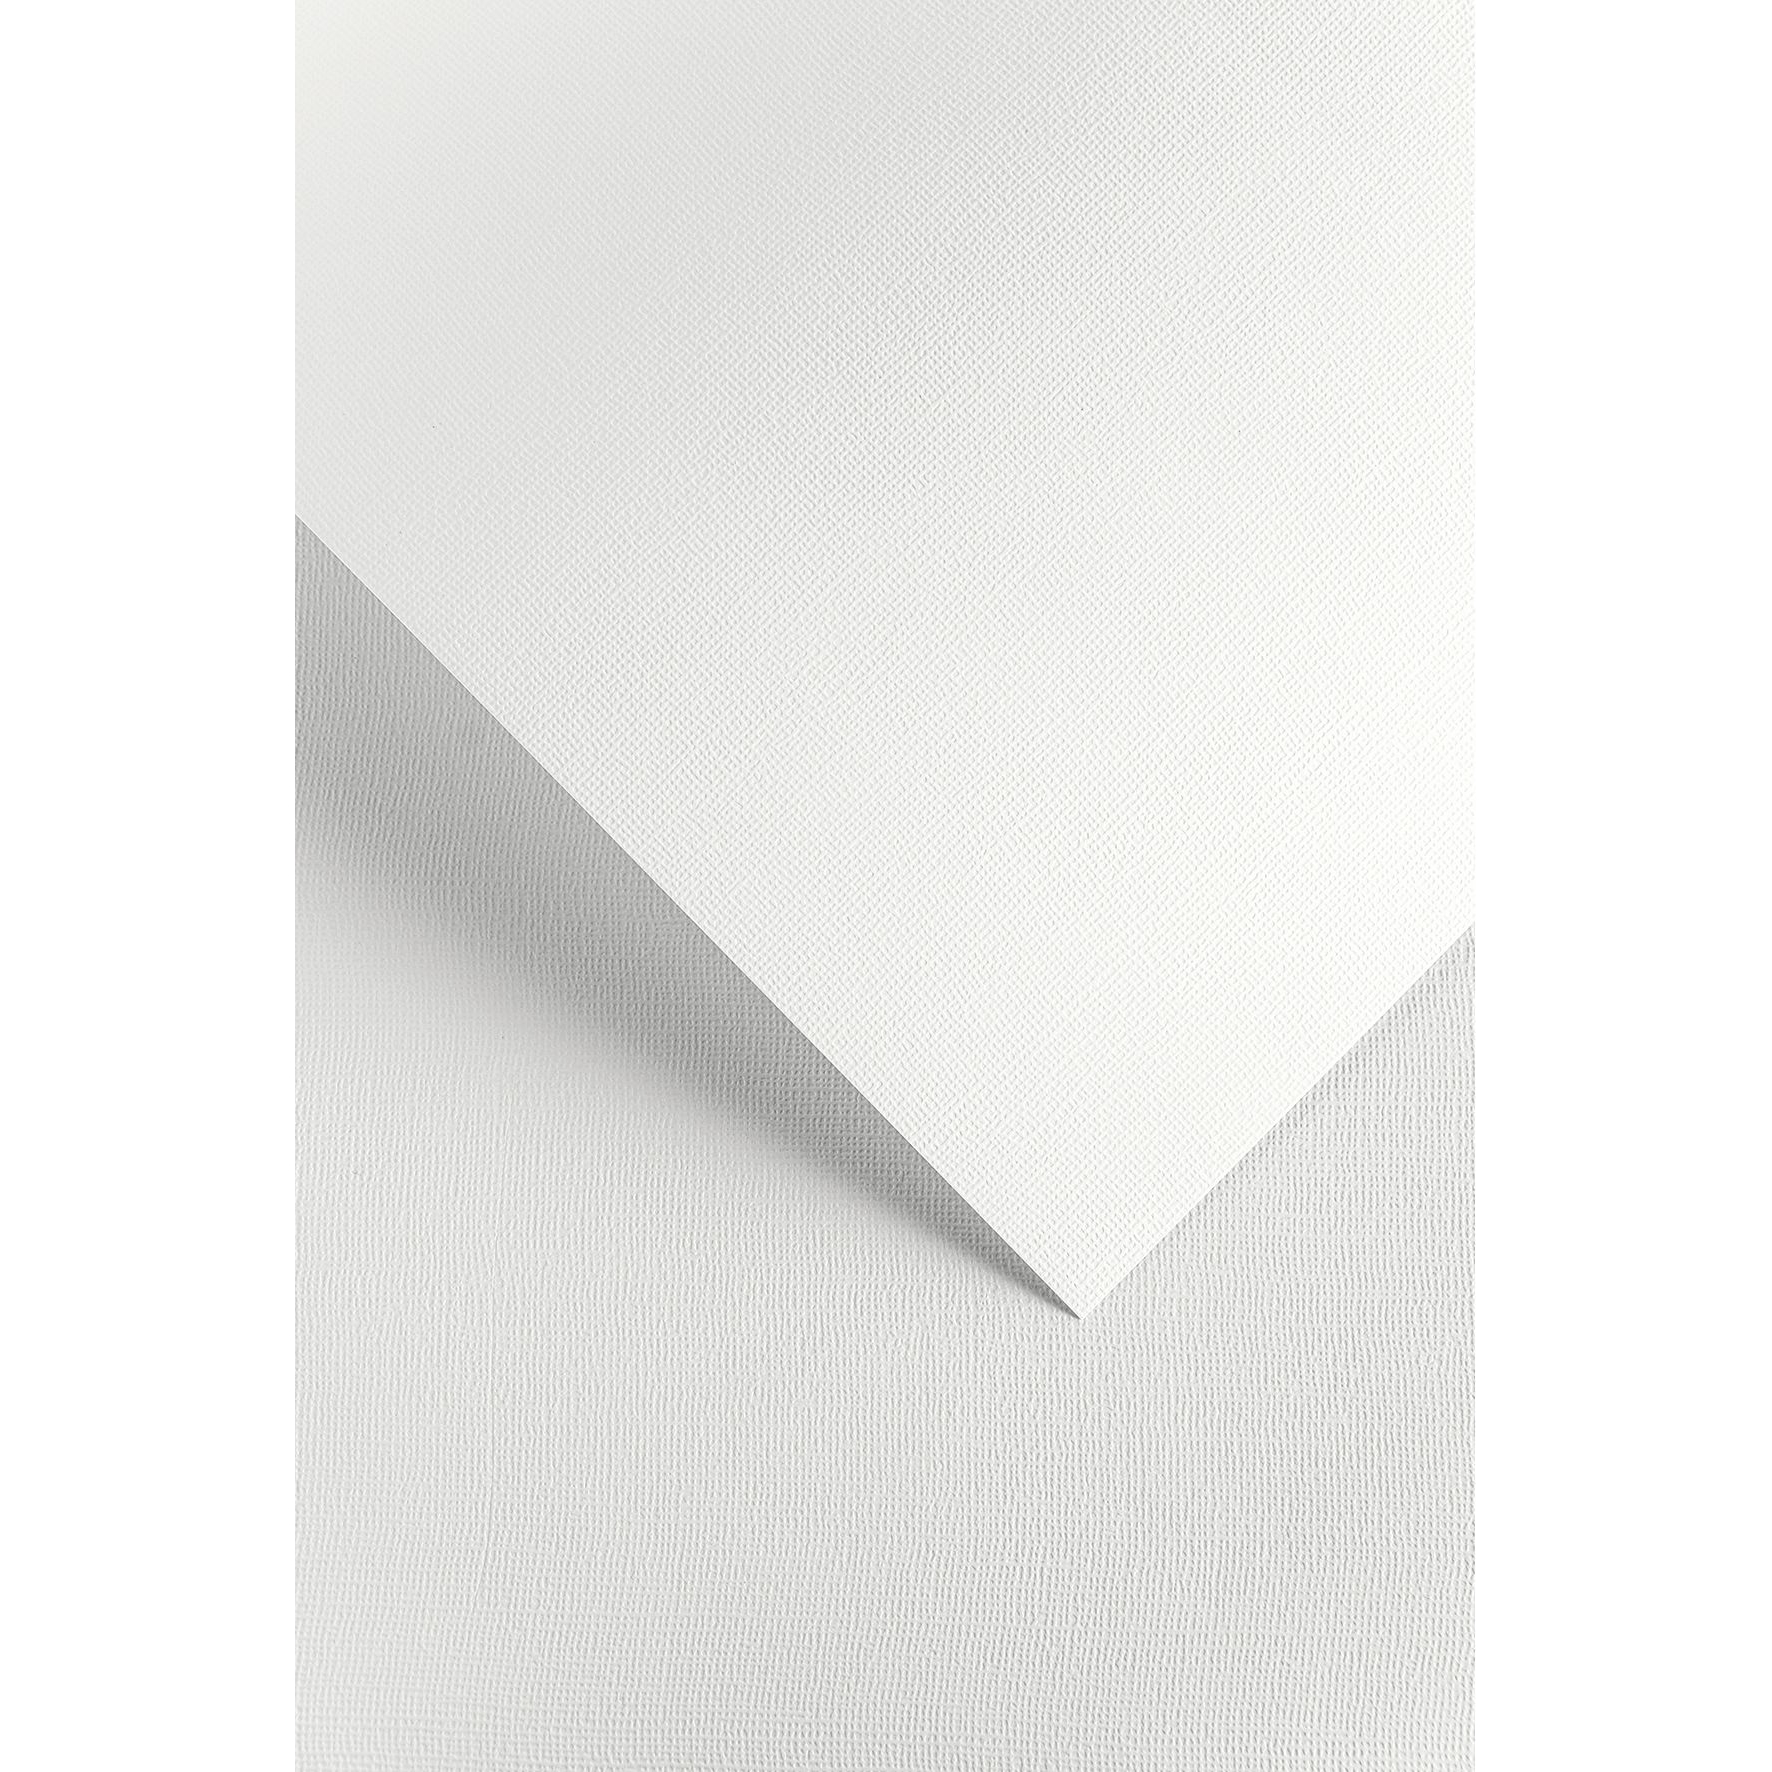 Ozdobný papír Len, bílý, 230g, 20ks